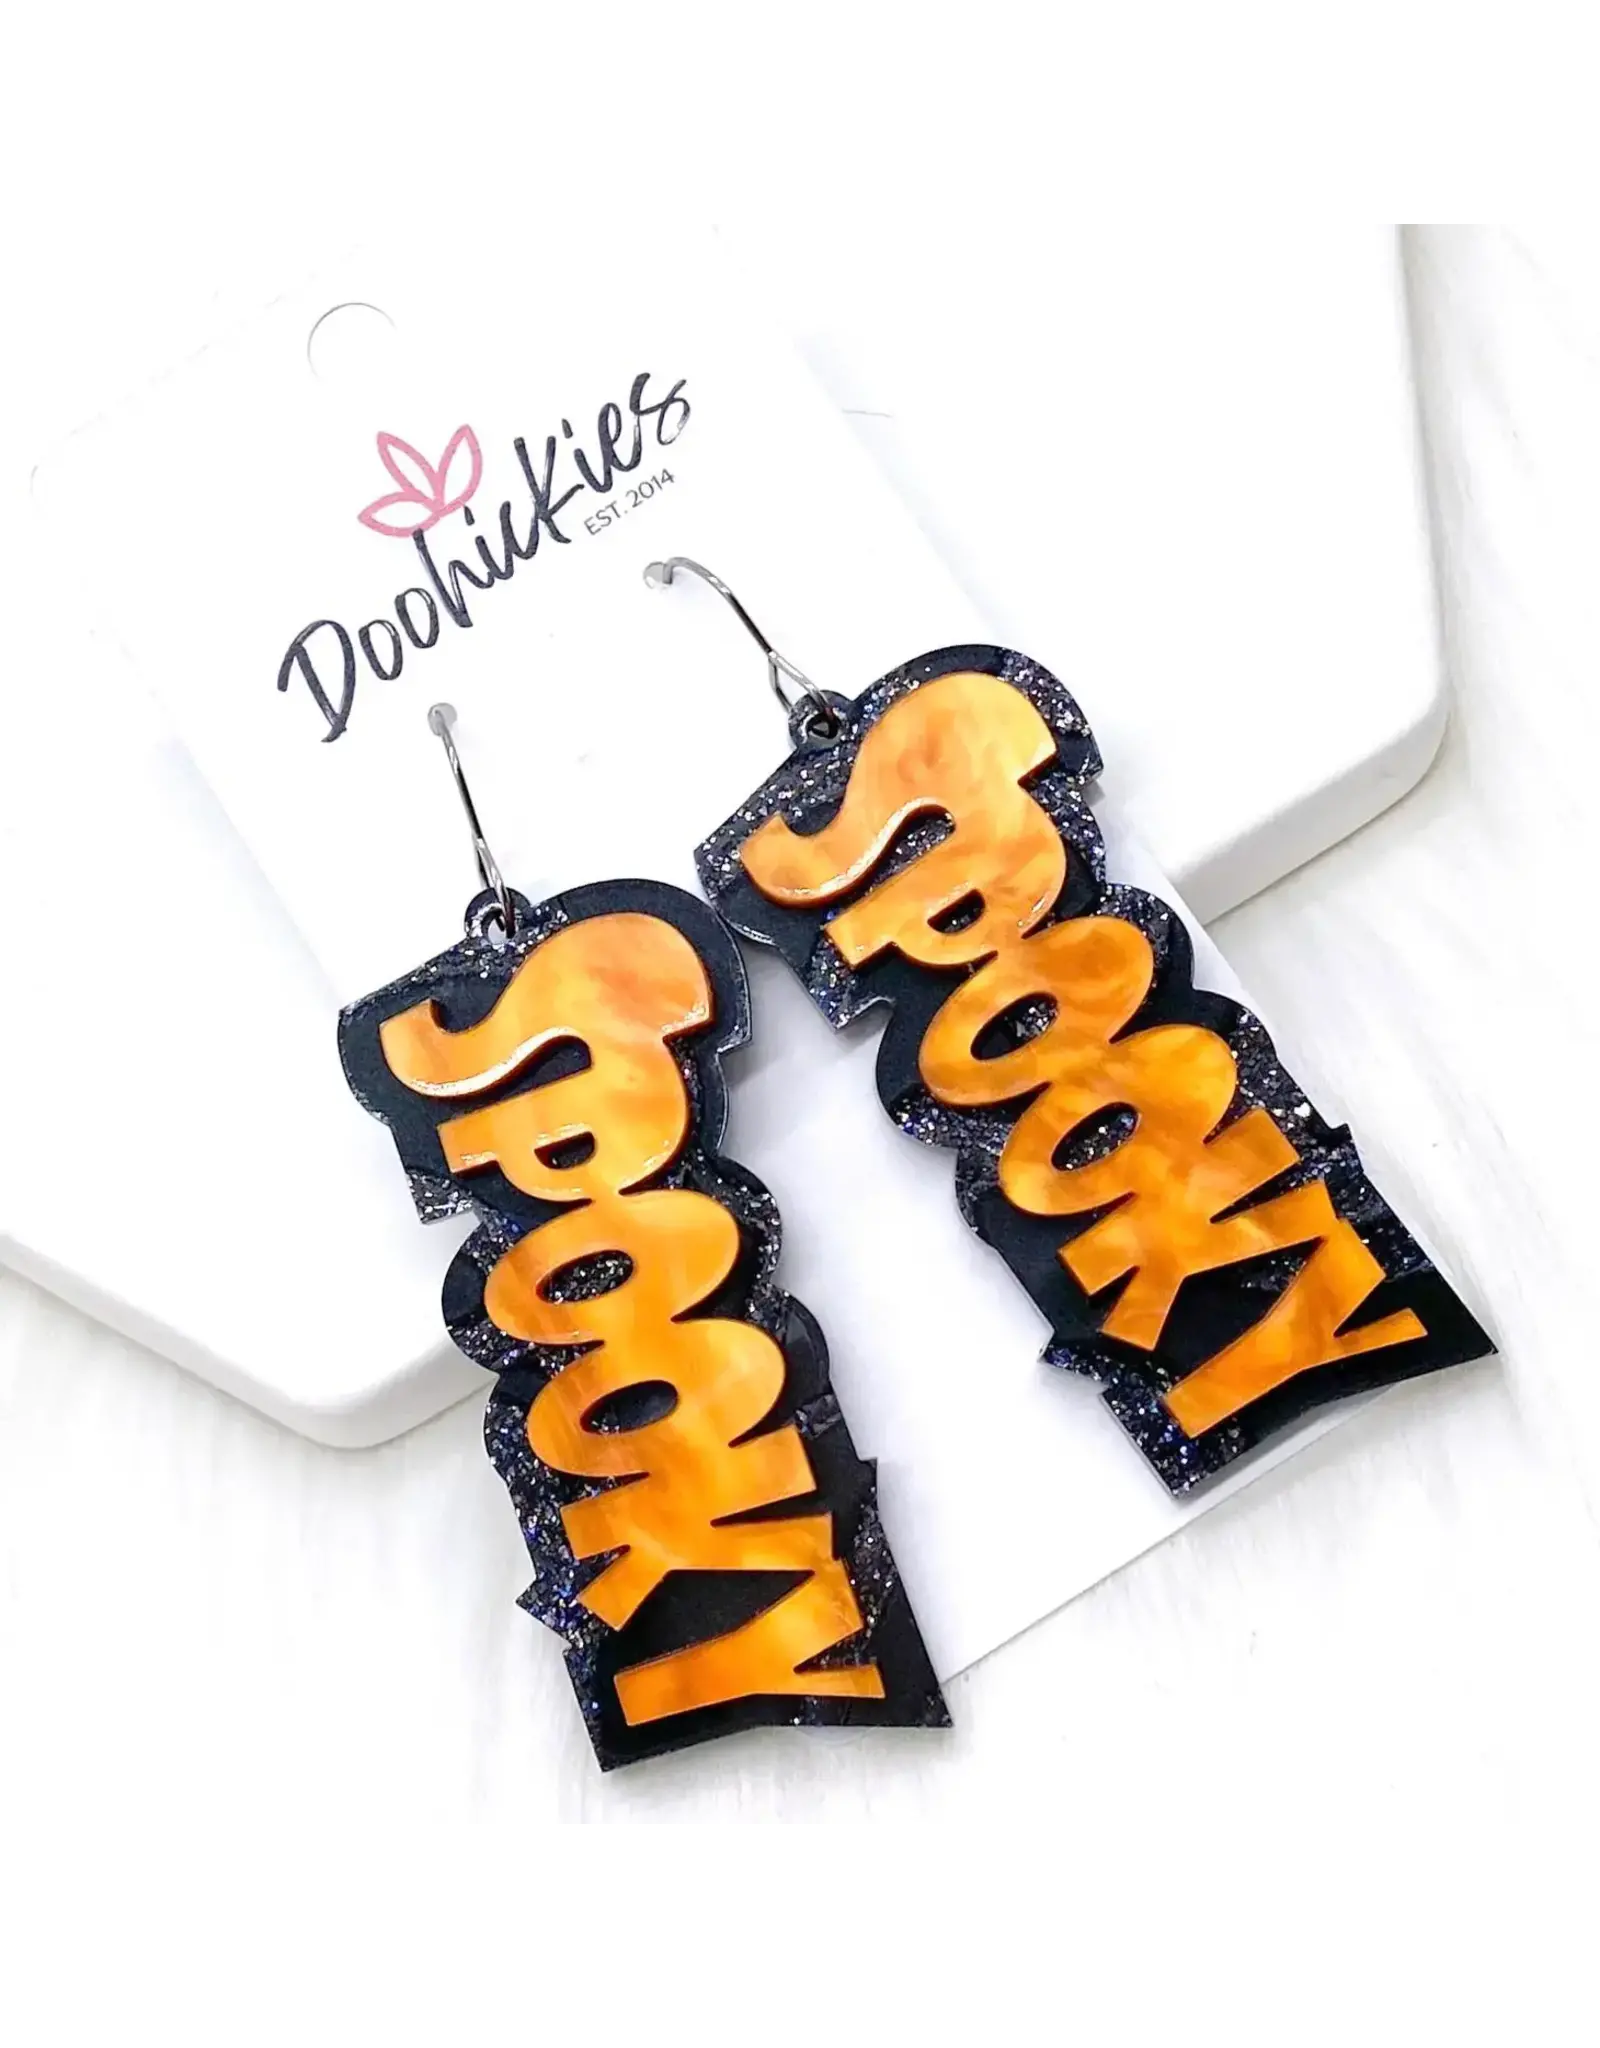 Doohickies/So. Charm Trade Layered SPOOKY Halloween Earrings